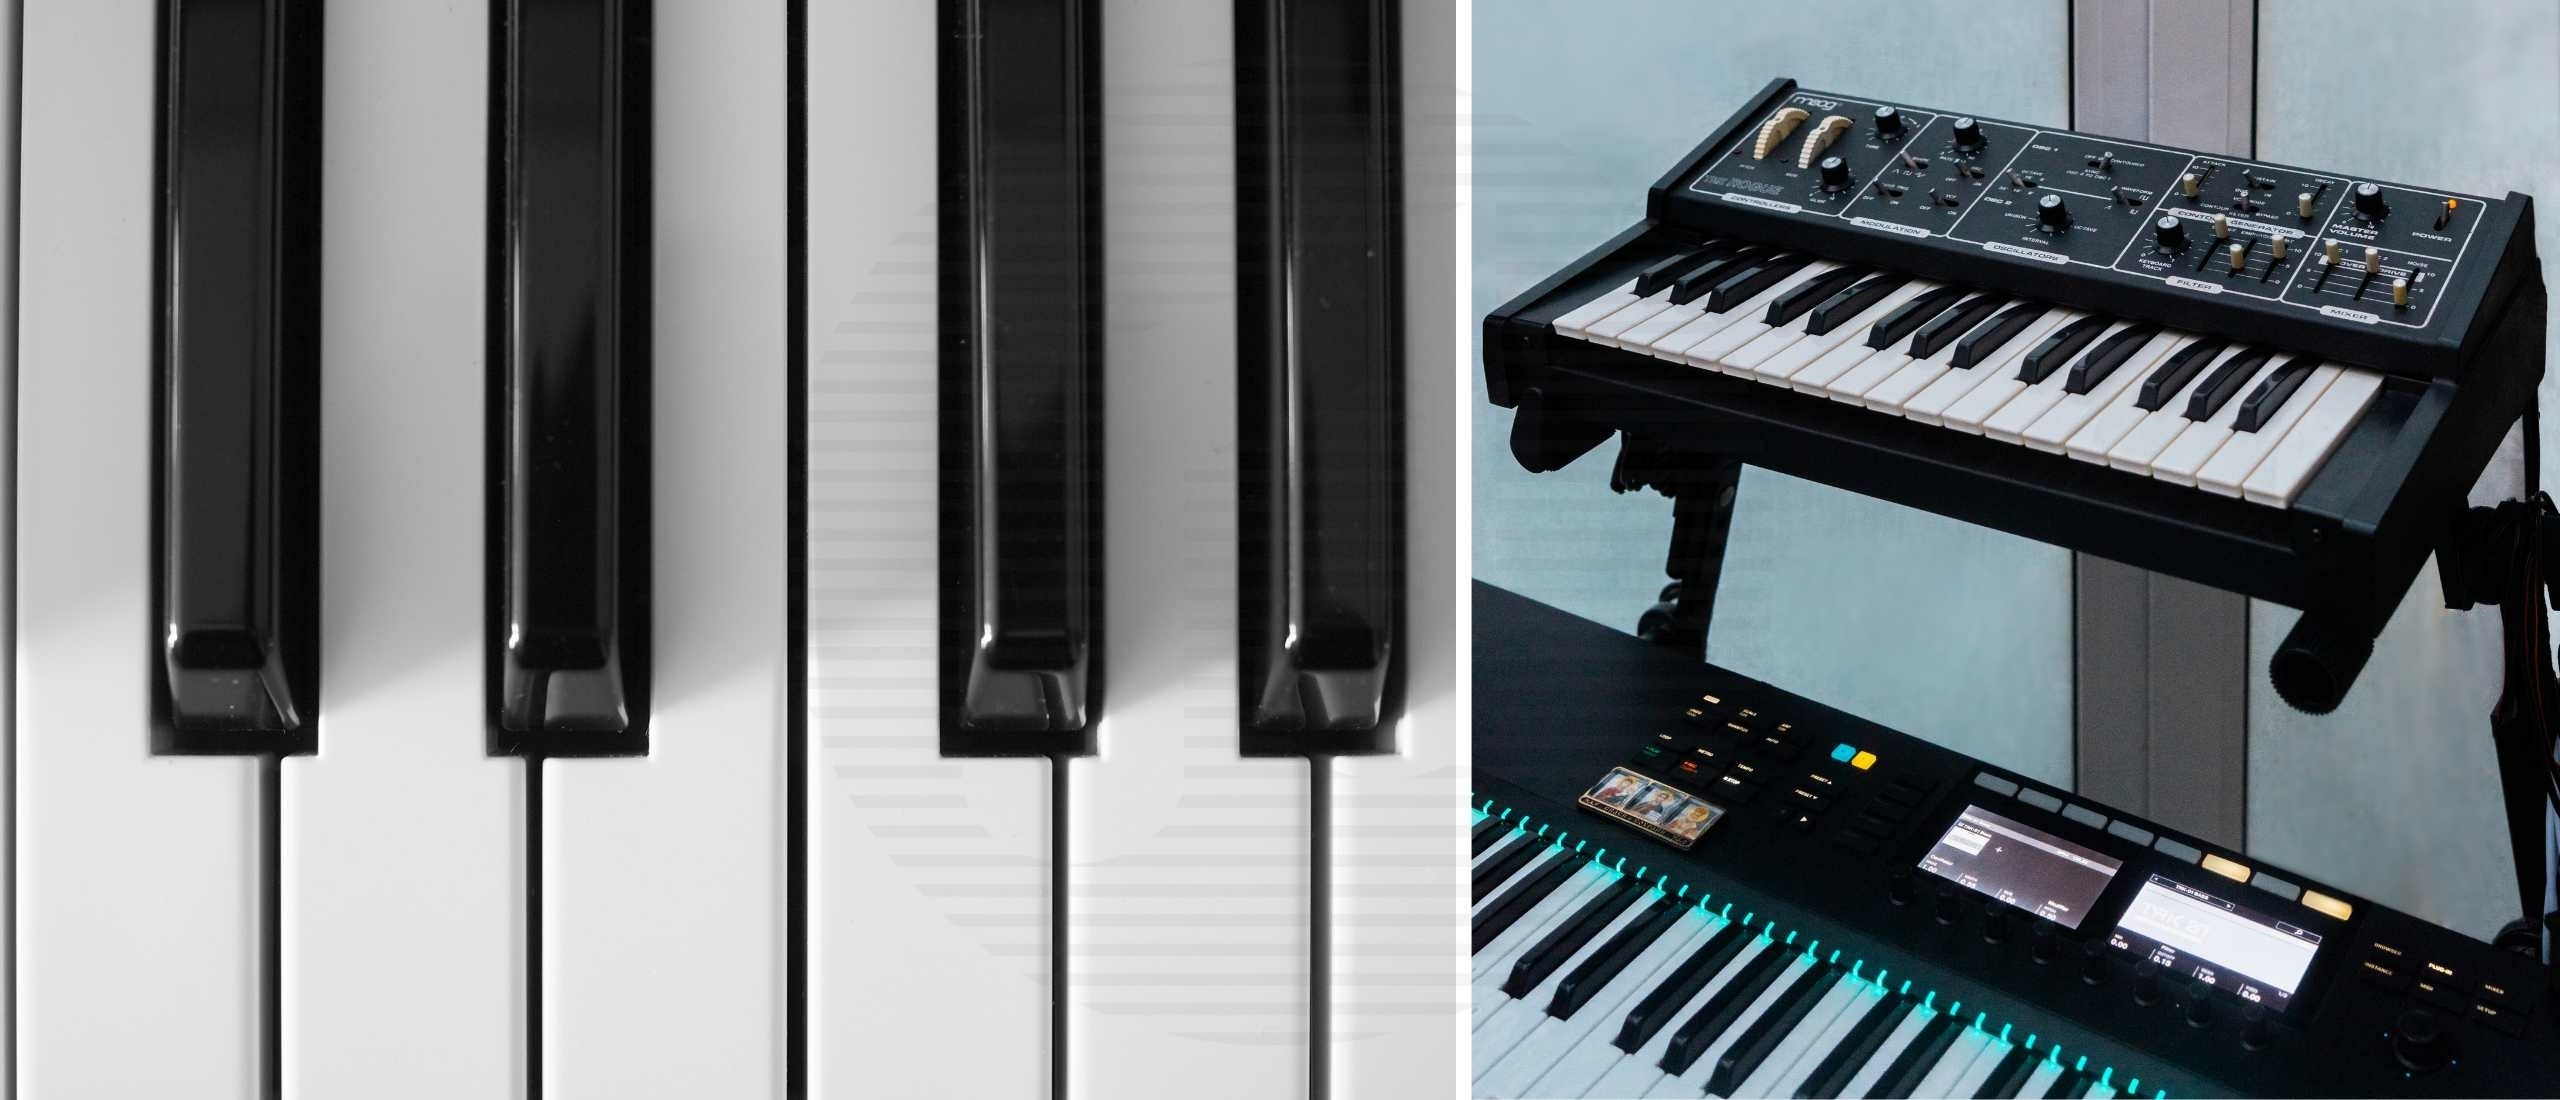 Toetsinstrument zoals Piano, Keyboard of Synthesizer Leren Spelen